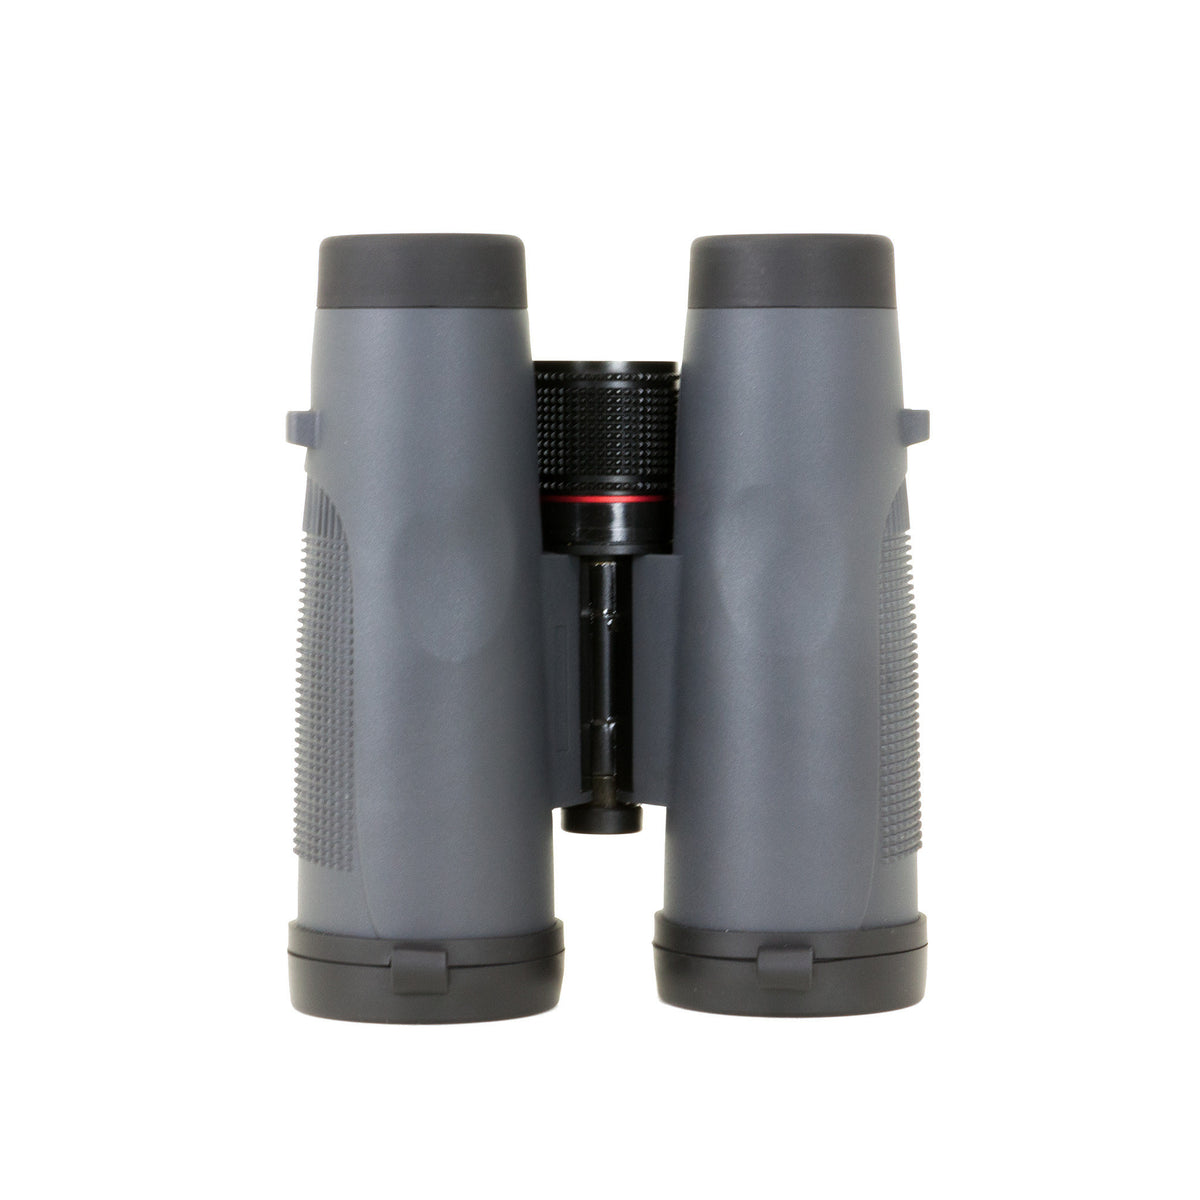 Rear view of PM8X42 binoculars